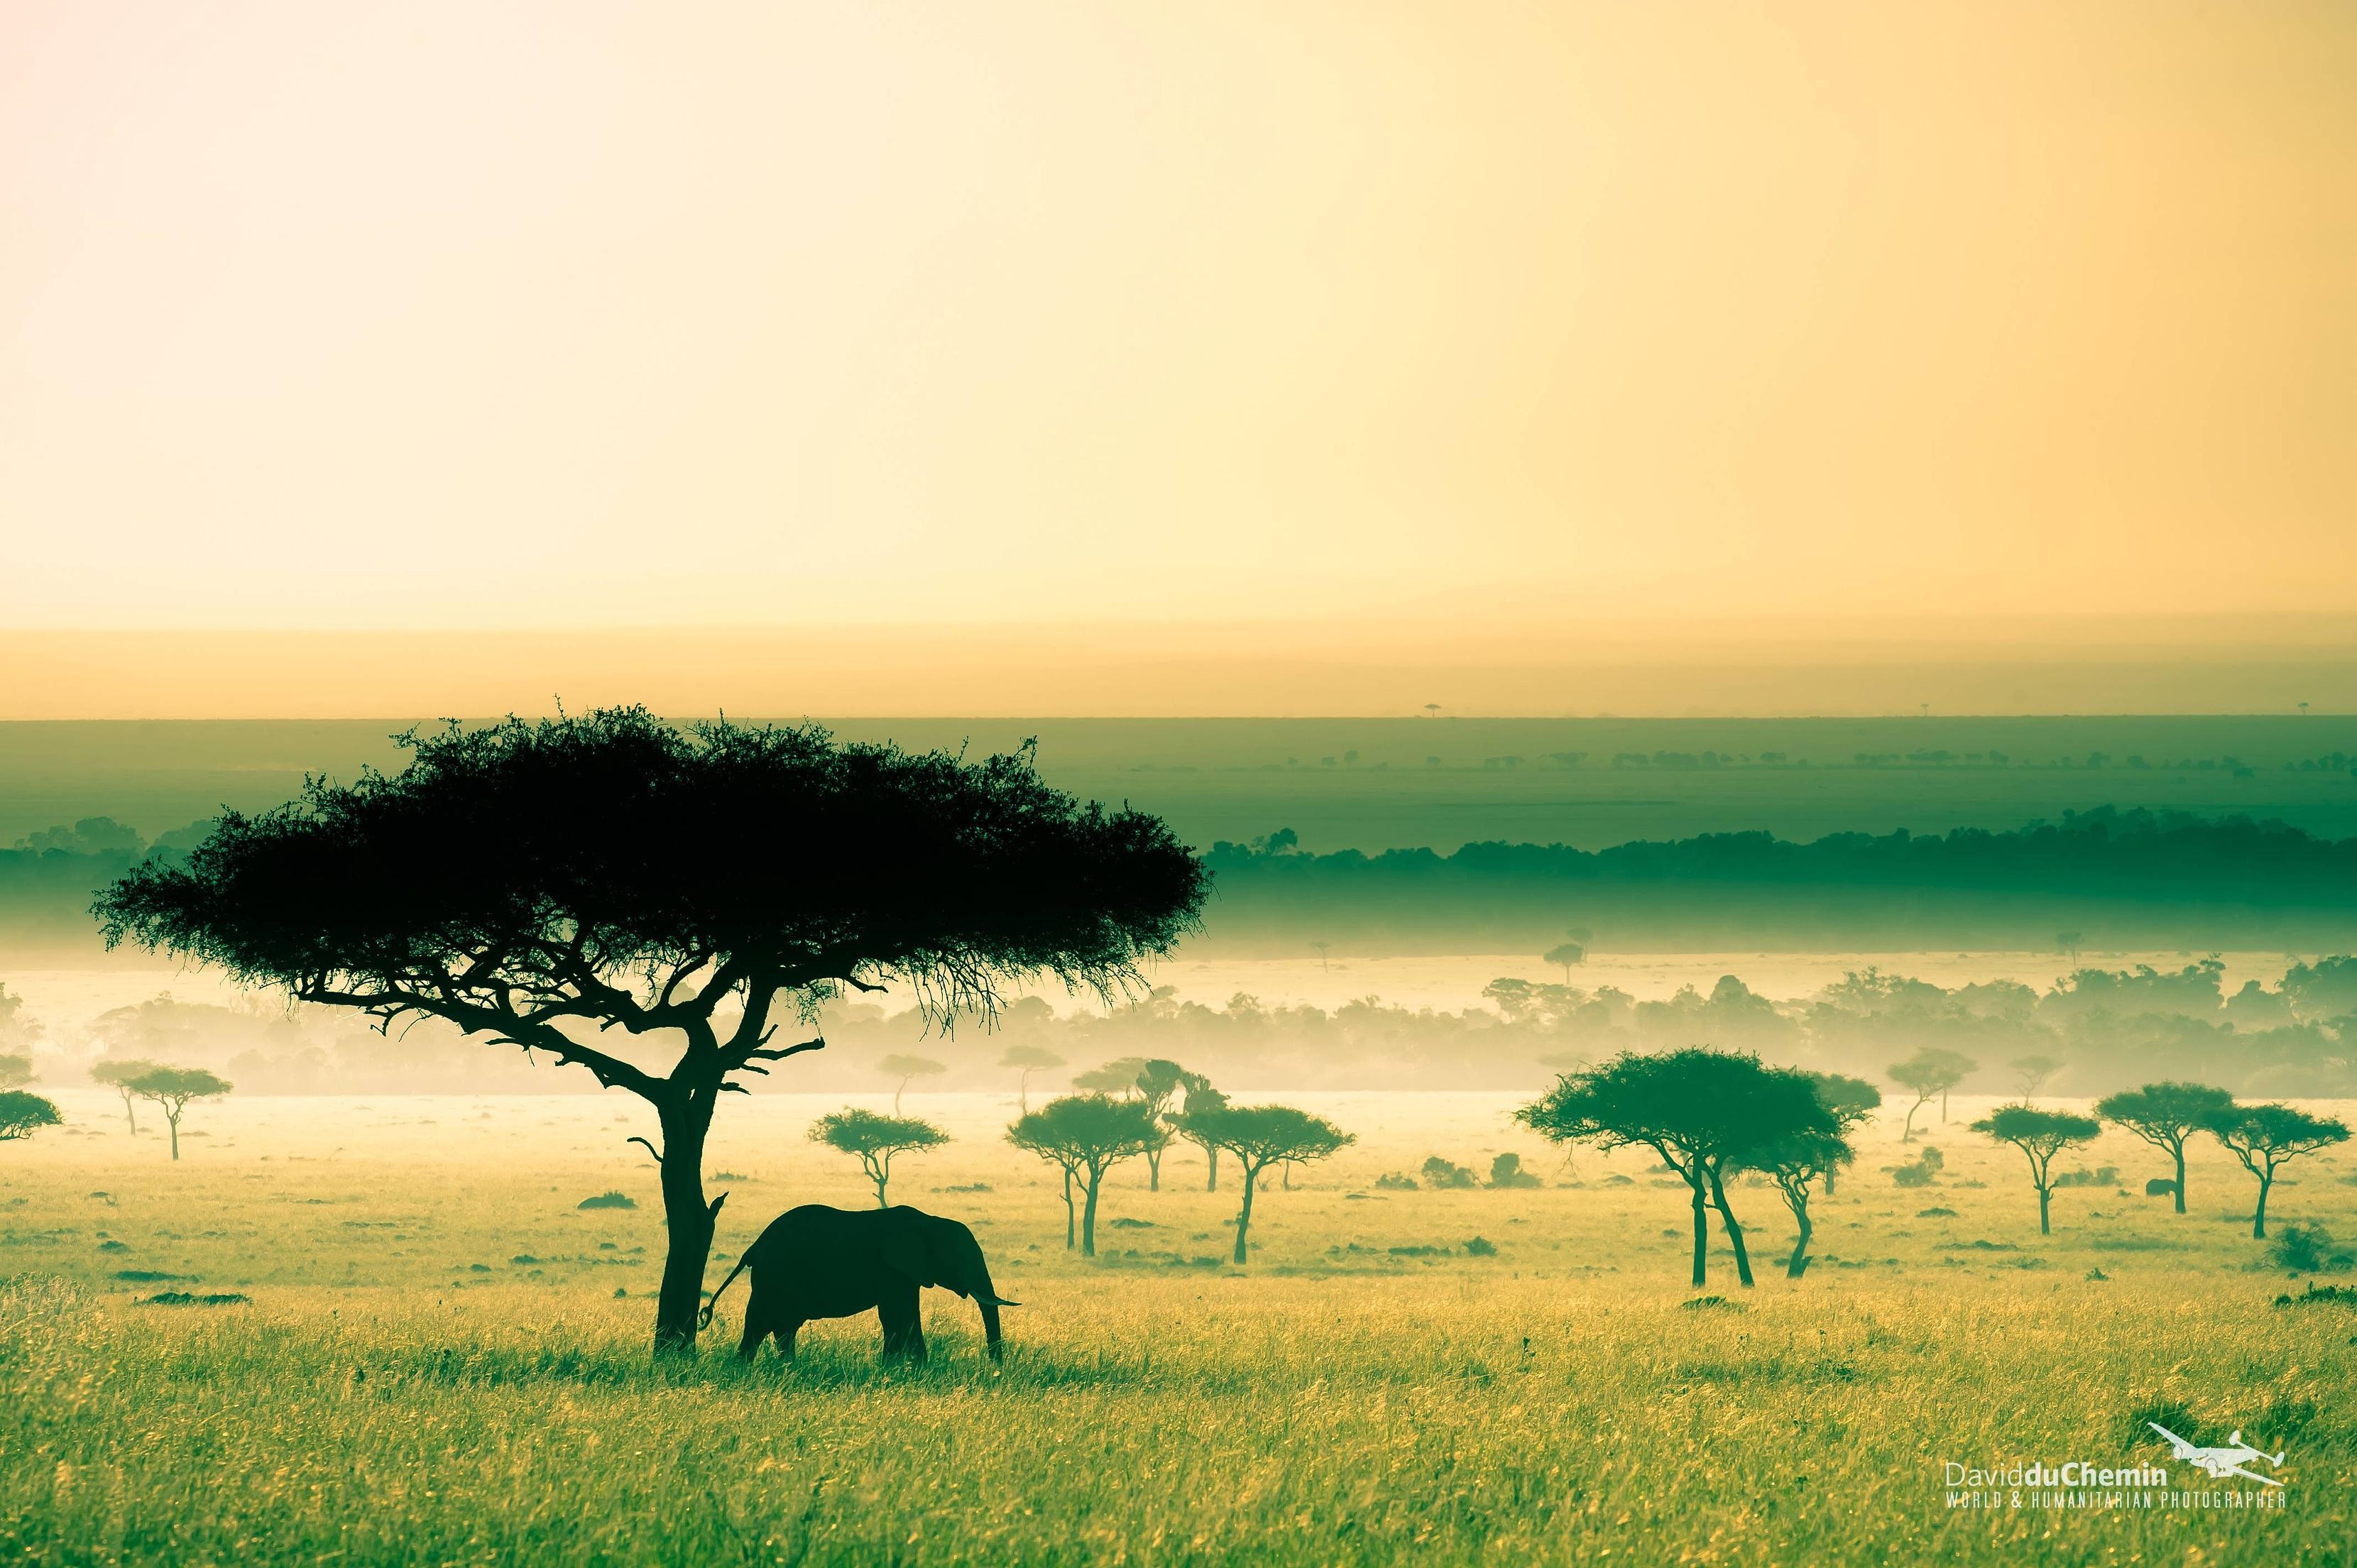 Savanna in Kenya, by David Duchemin